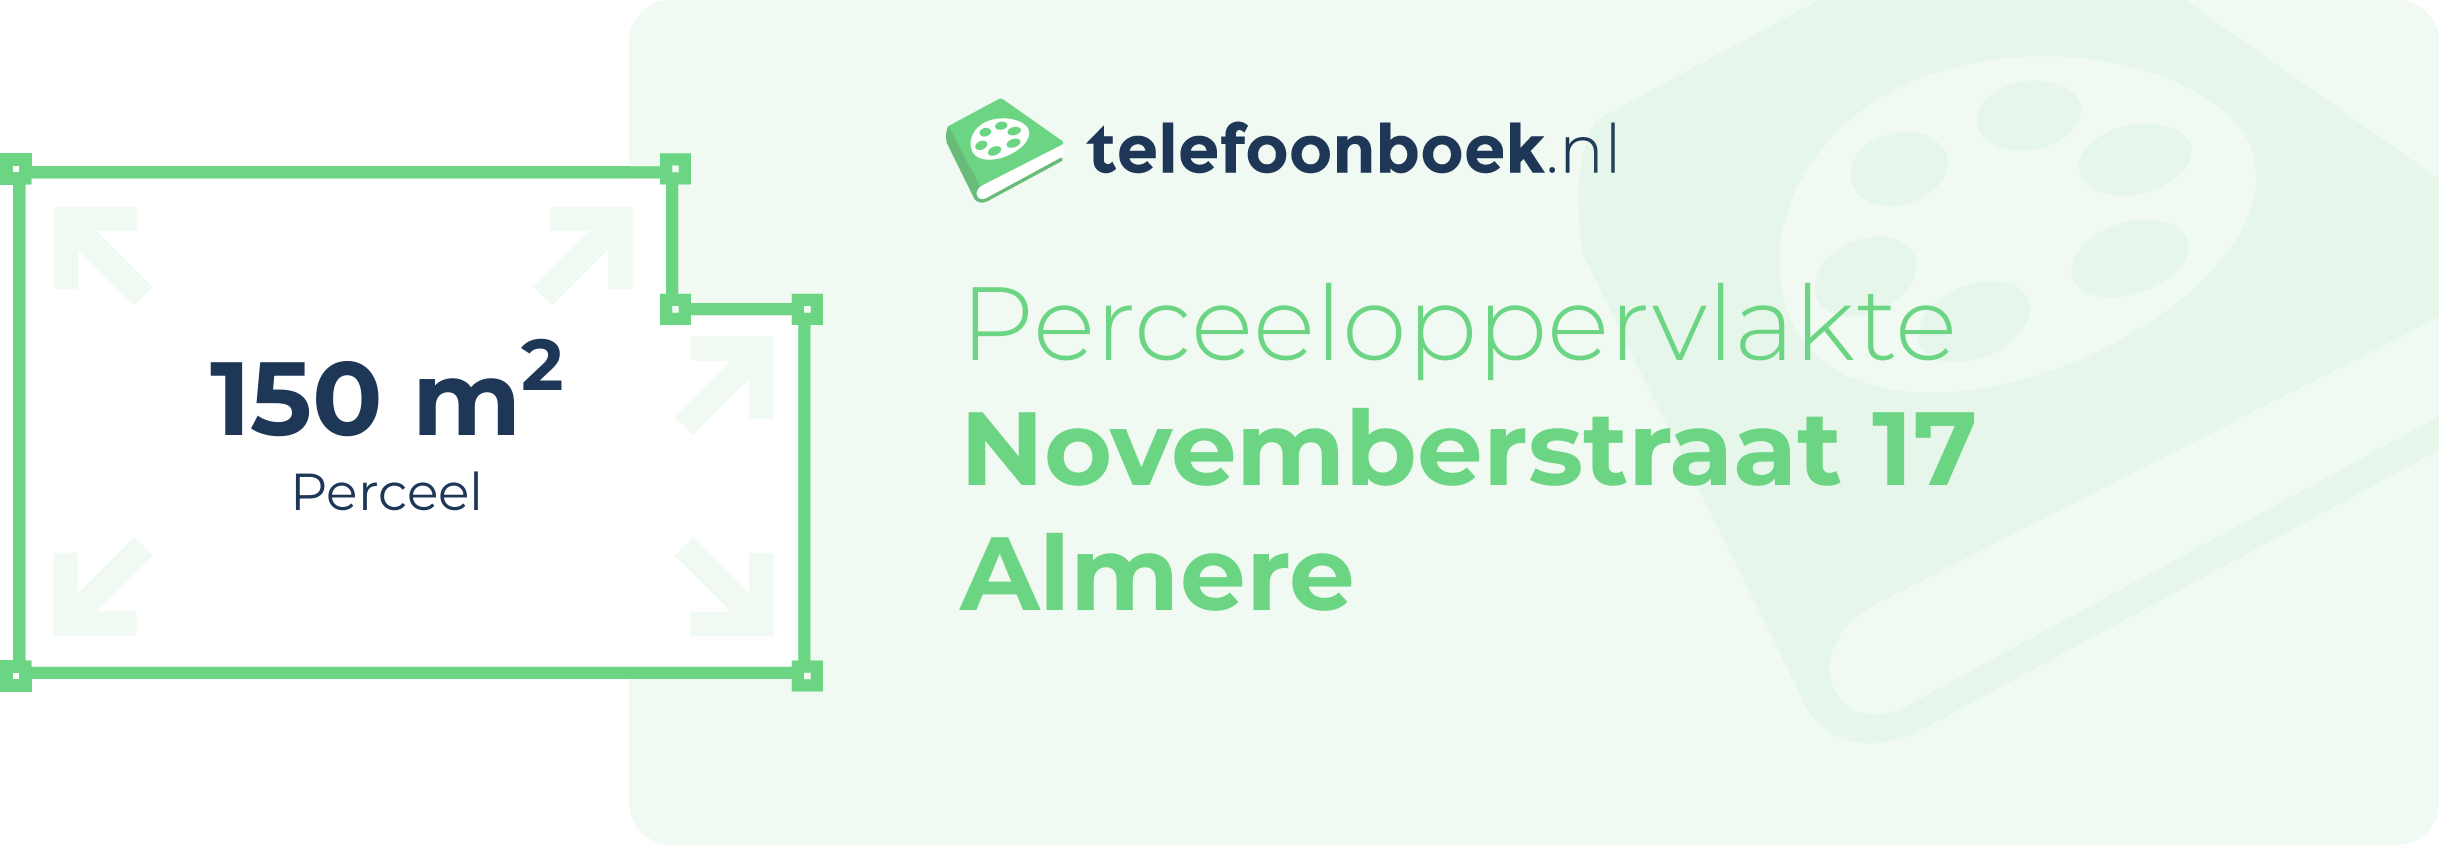 Perceeloppervlakte Novemberstraat 17 Almere